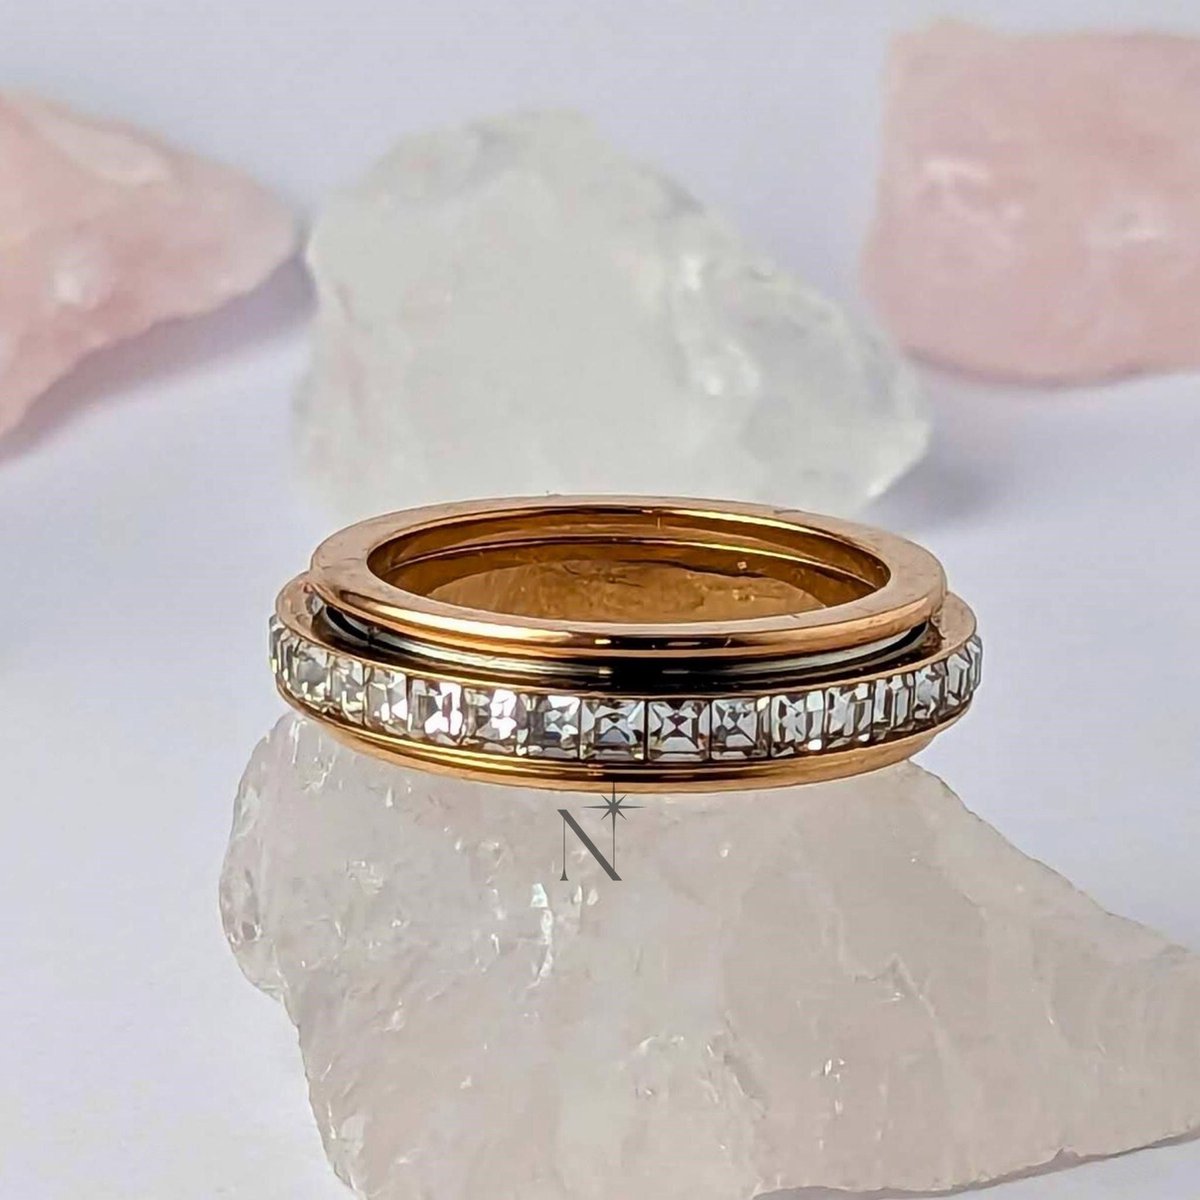 Luminora Elevate Ring Roségoud - Fidget Ring Diamanten - Anxiety Ring - Stress Ring - Anti Stress Ring - Spinner Ring - Spinning Ring - Draai Ring - Maat 62.5 | ⌀ 19.9 - Wellness Sieraden